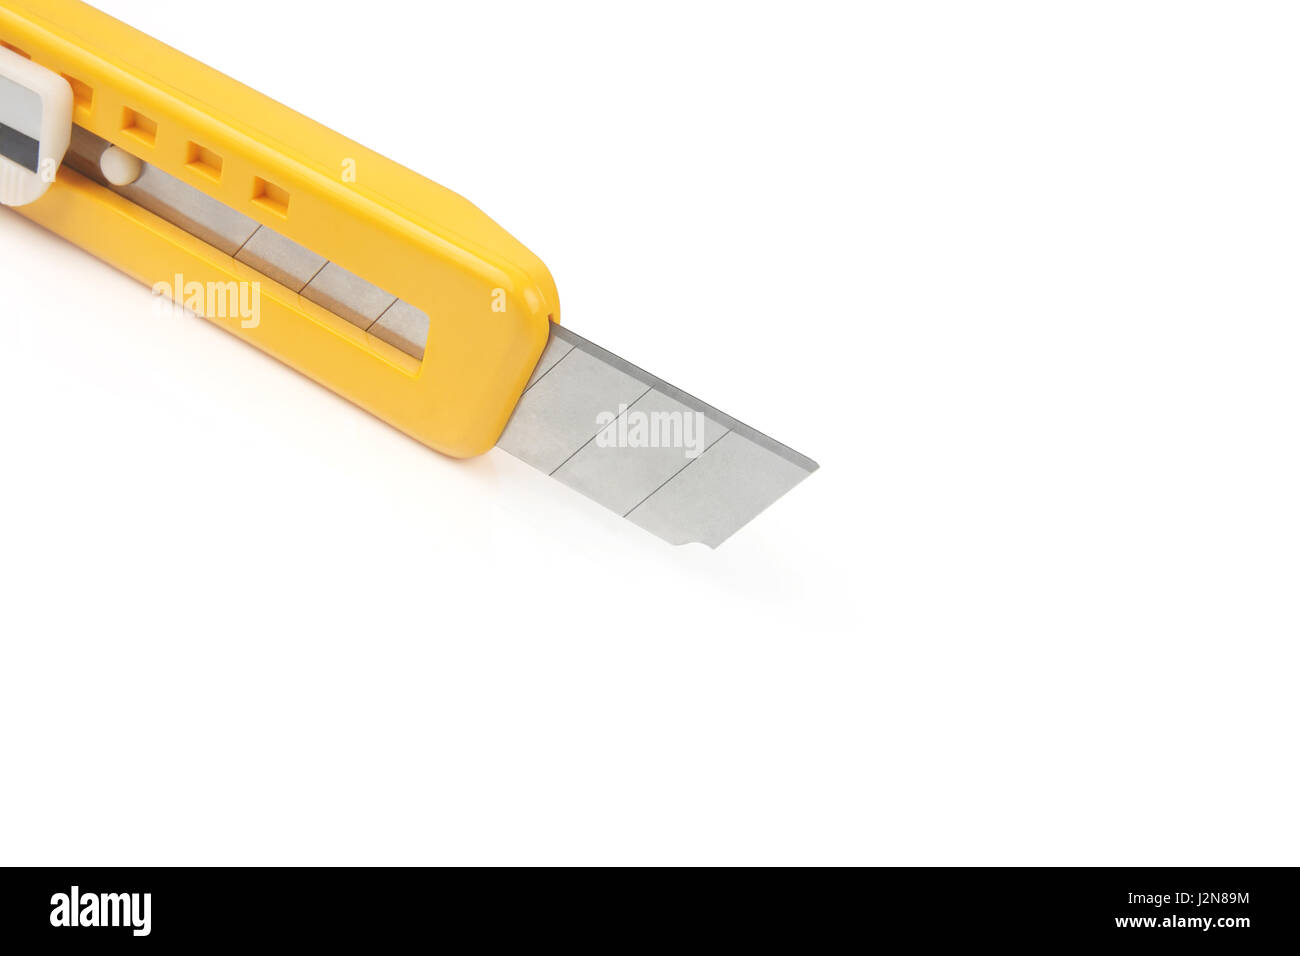 stationery knife Stock Photo